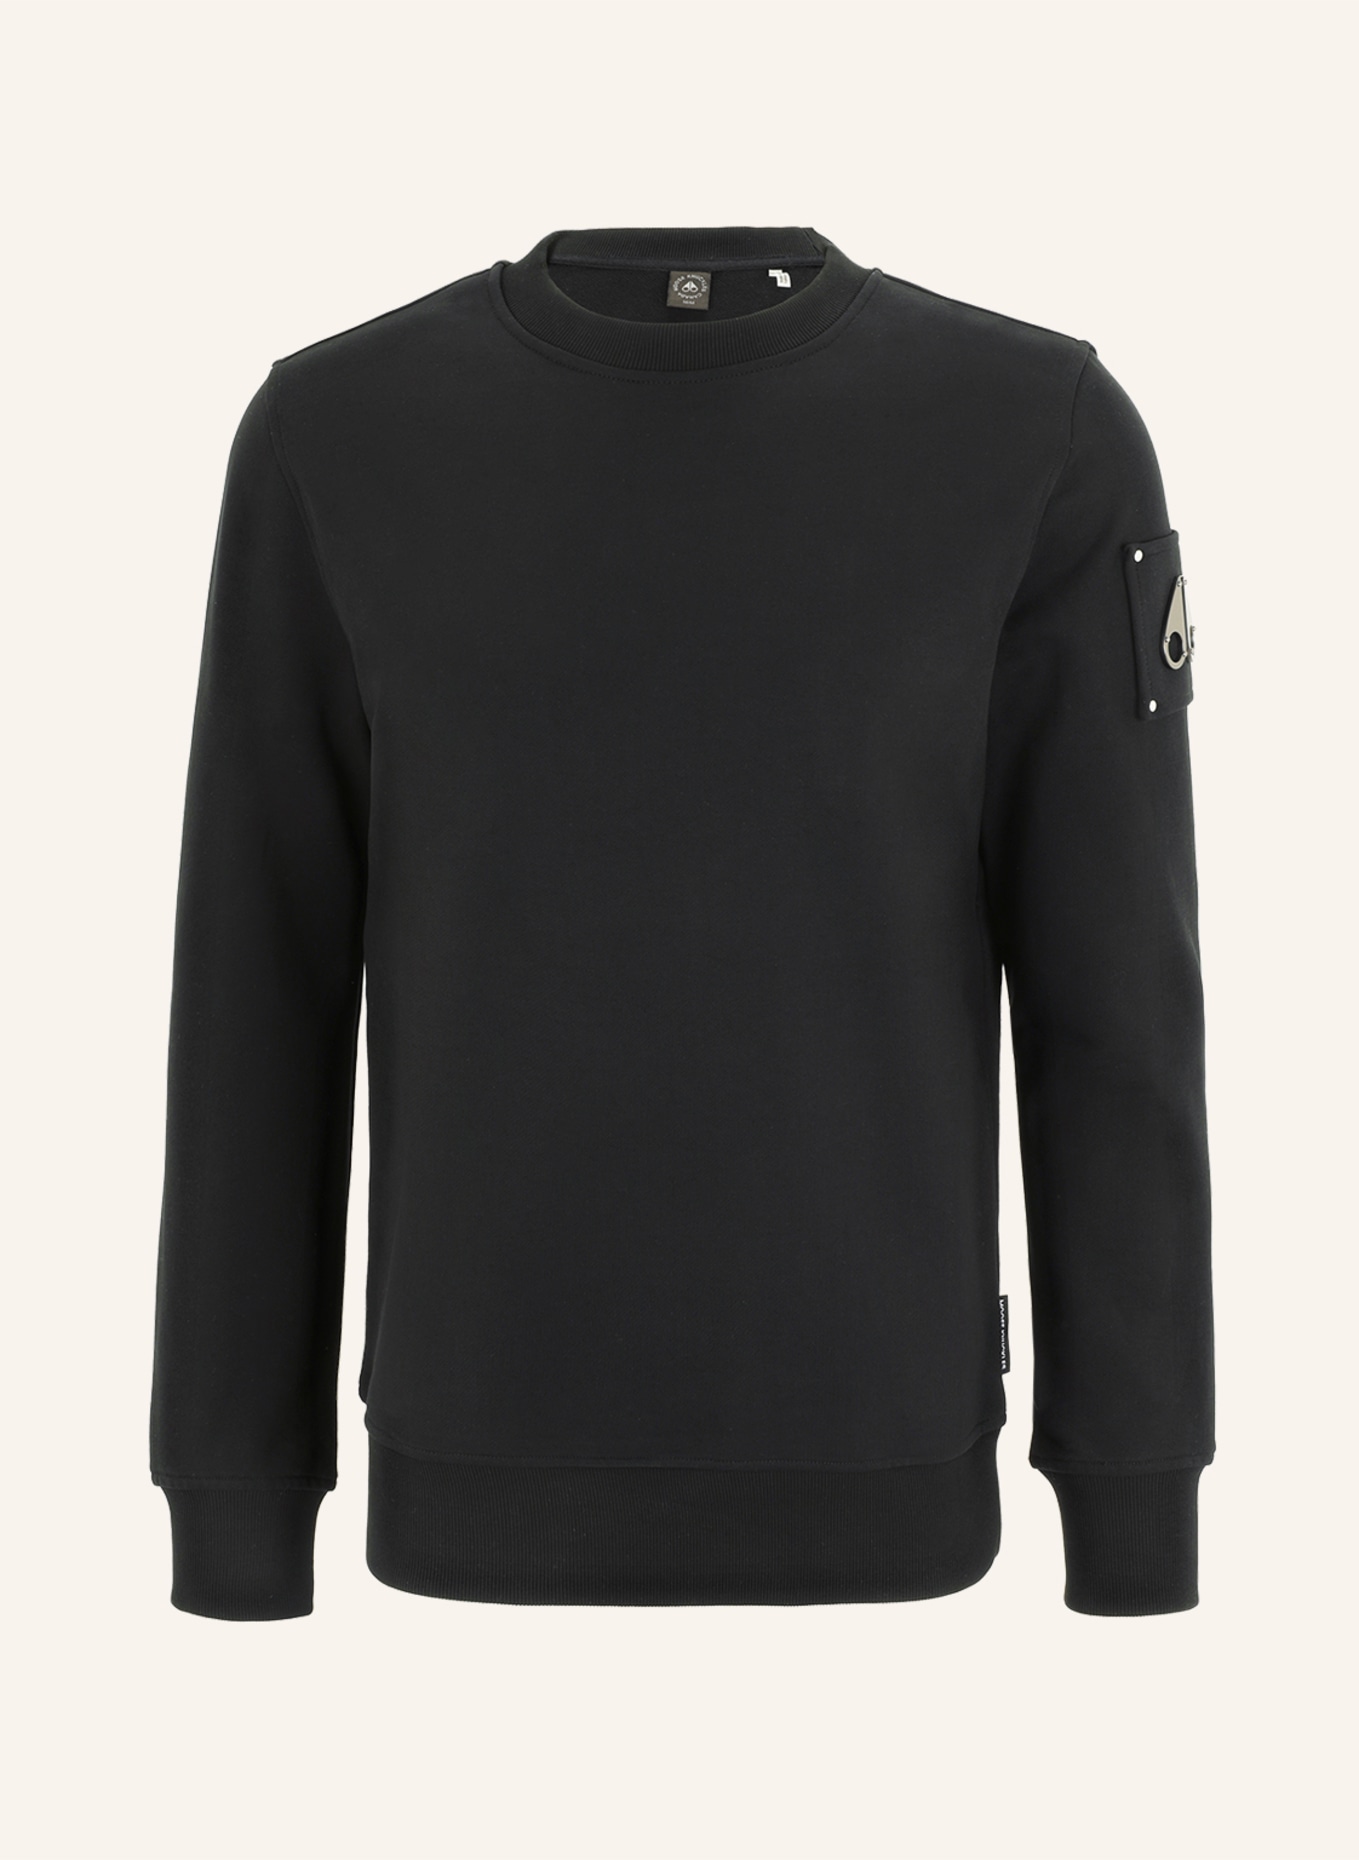 MOOSE KNUCKLES Sweatshirt HARTSFIELD, Farbe: SCHWARZ (Bild 1)